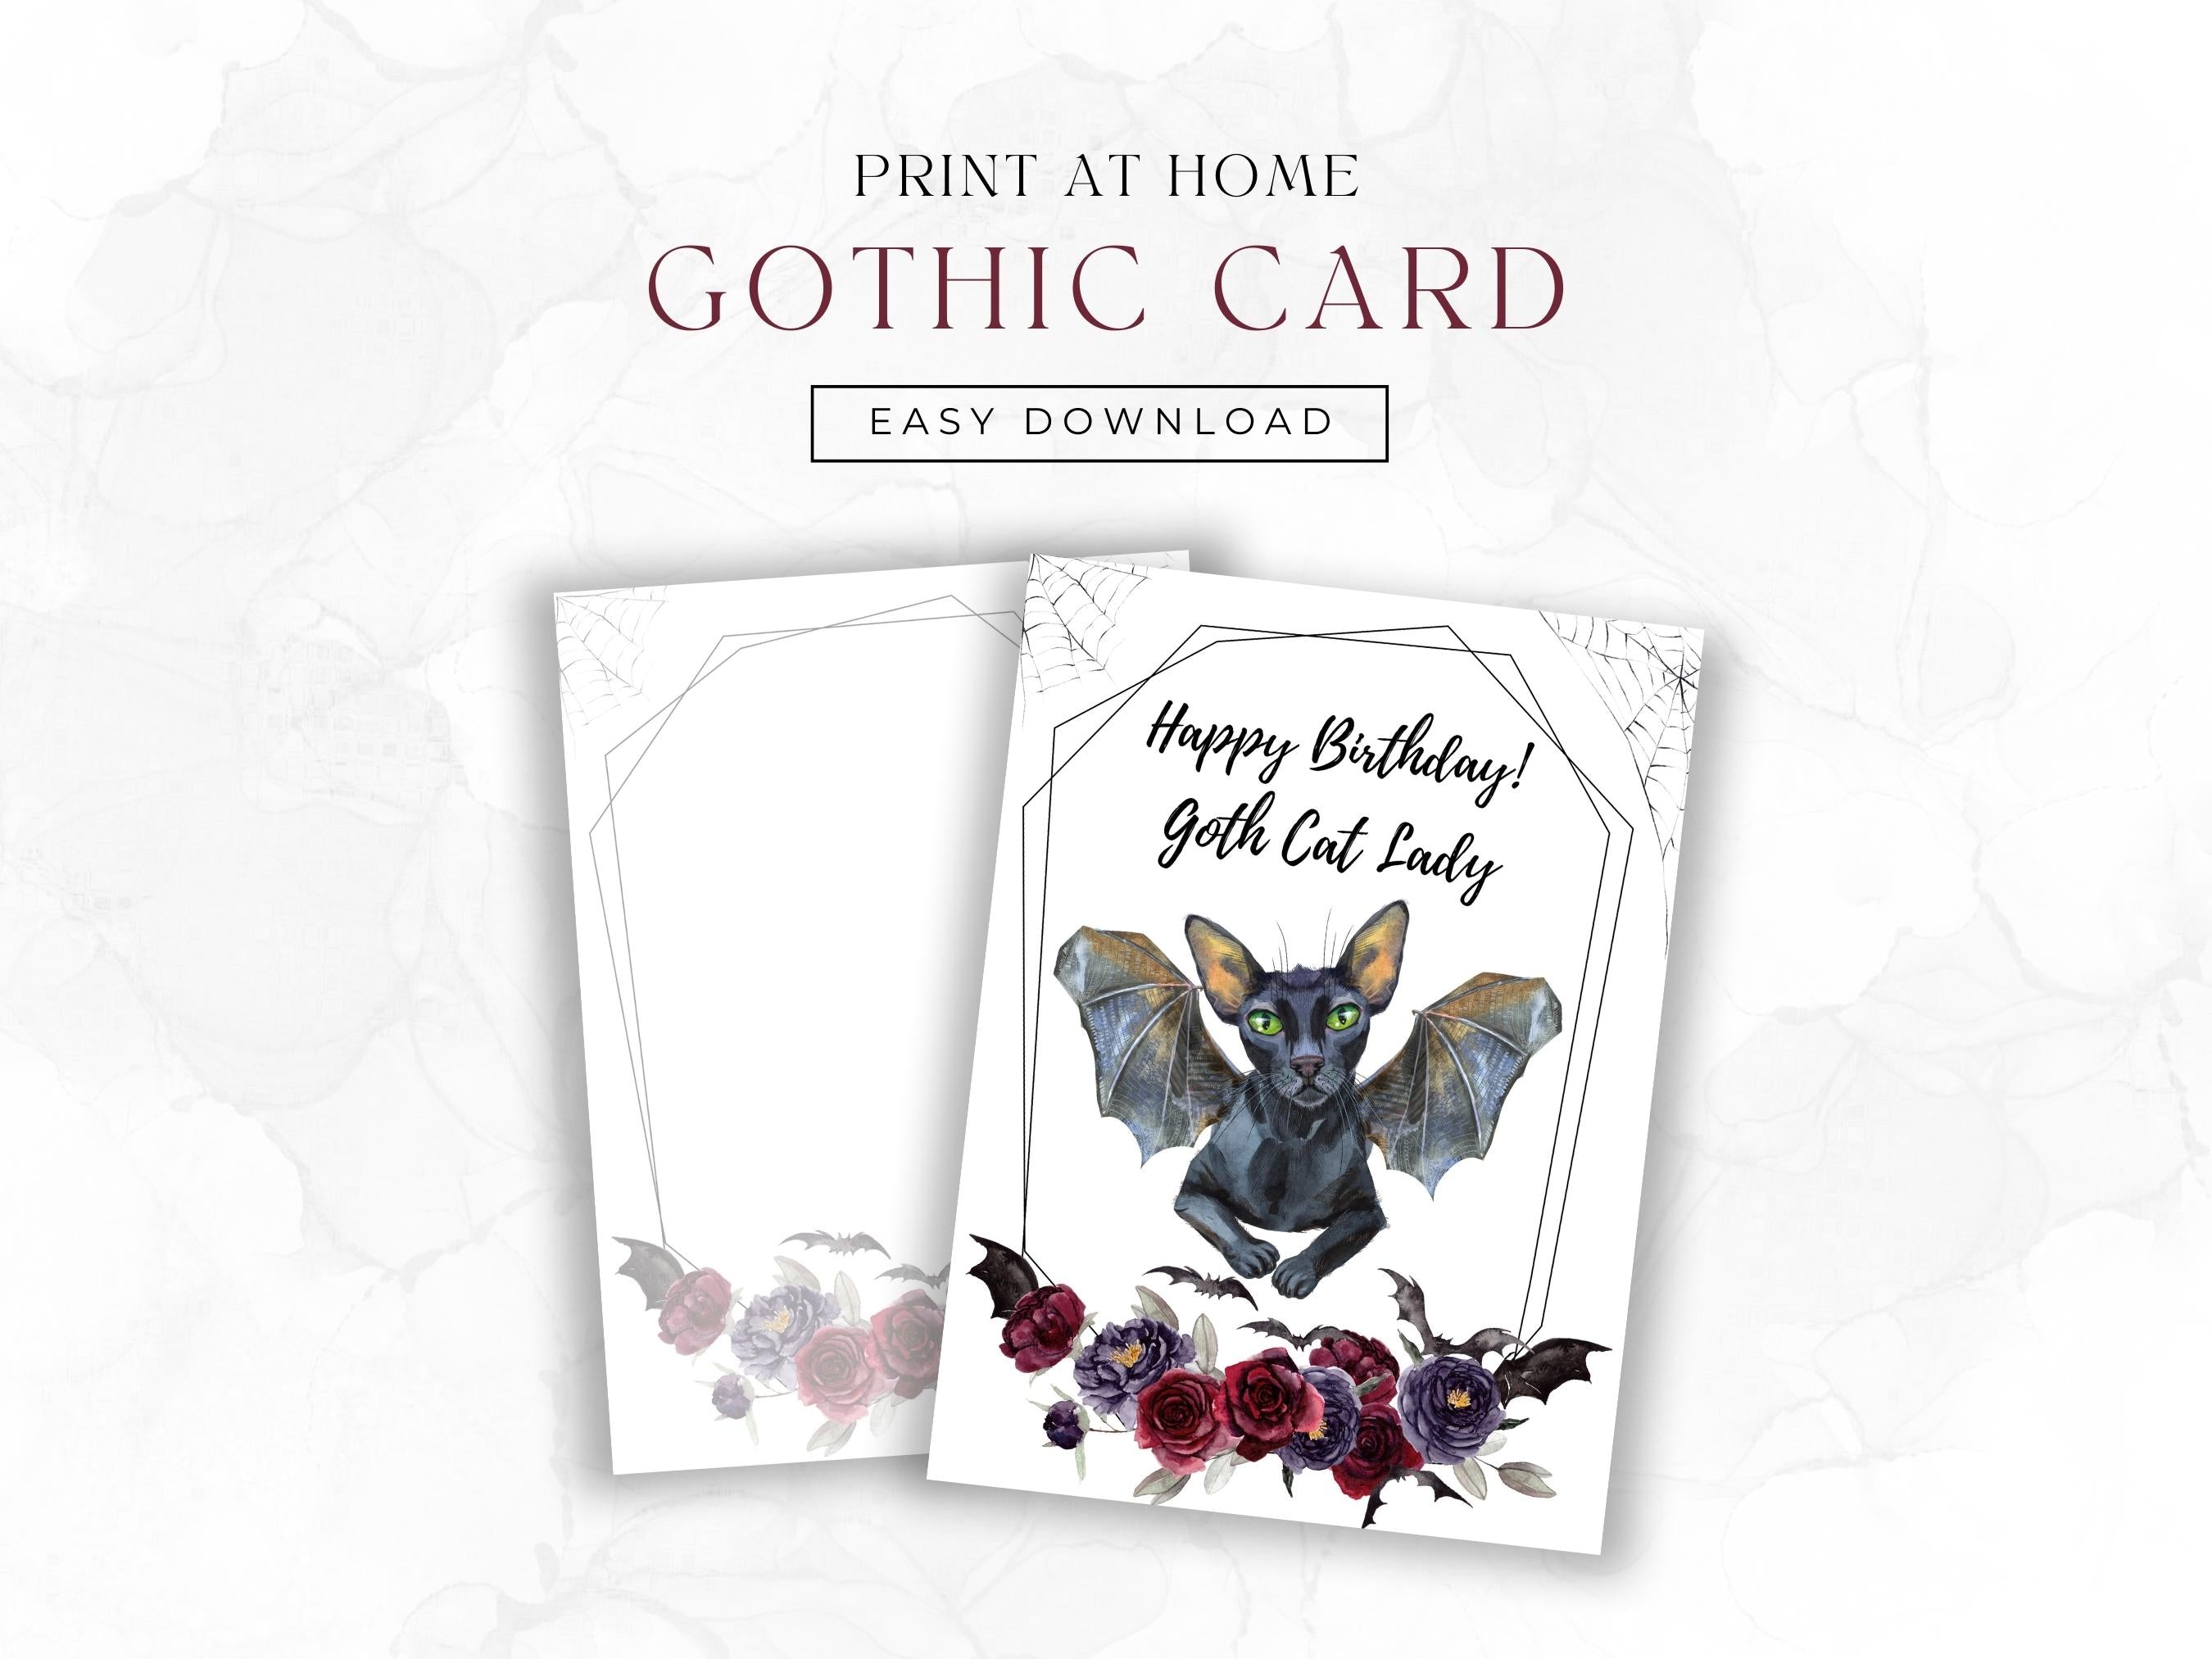 Goth Cat Lady Postkarte